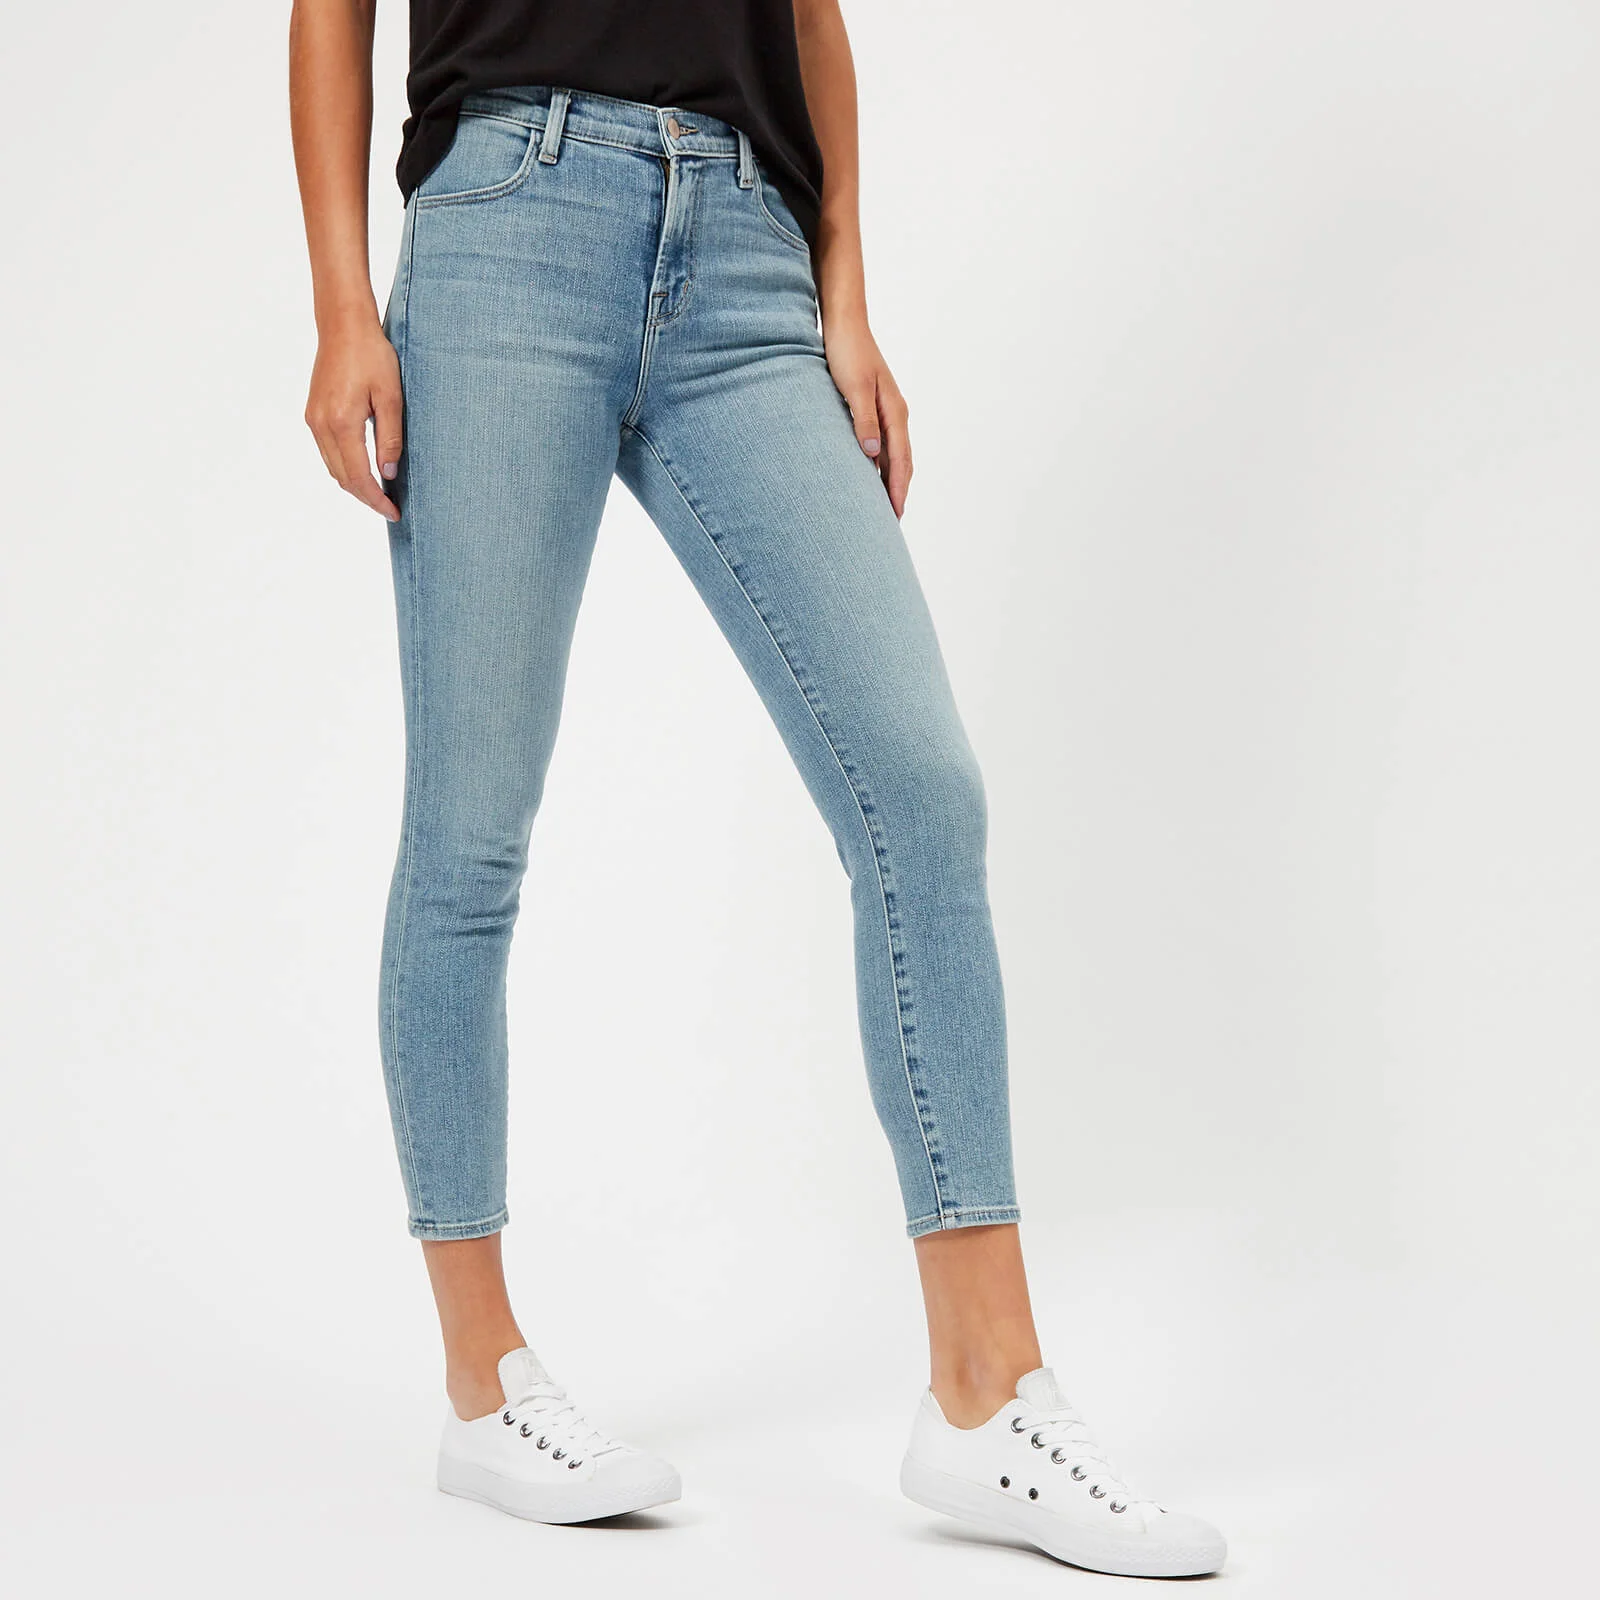 J Brand Women's Alana High Rise Cropped Skinny Jeans - Surge Image 1